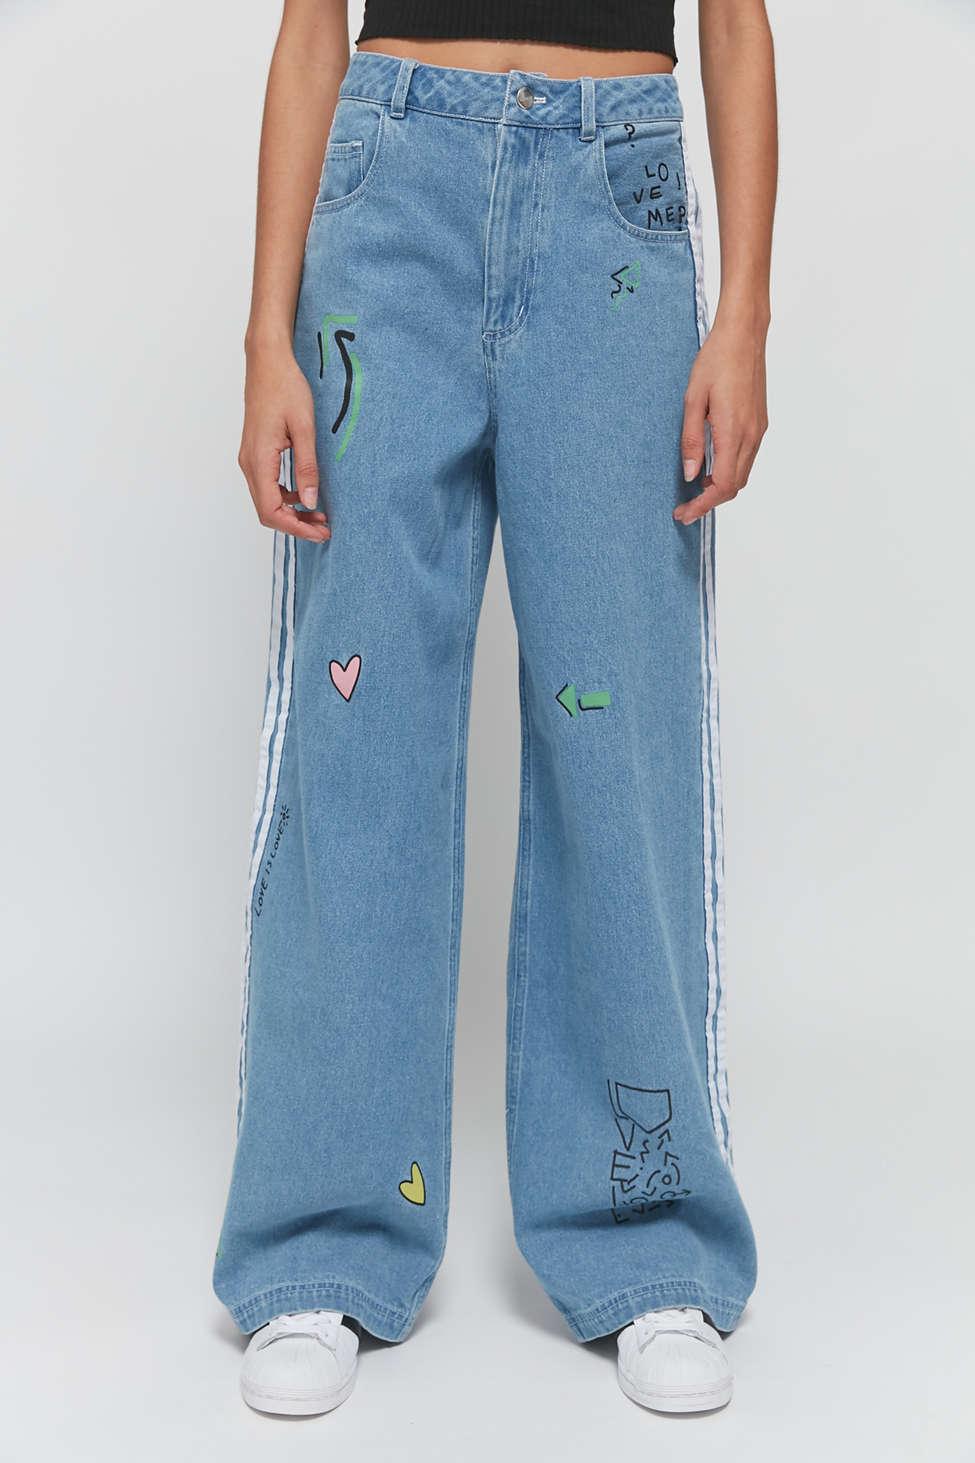 adidas originals x fiorucci snap button jean